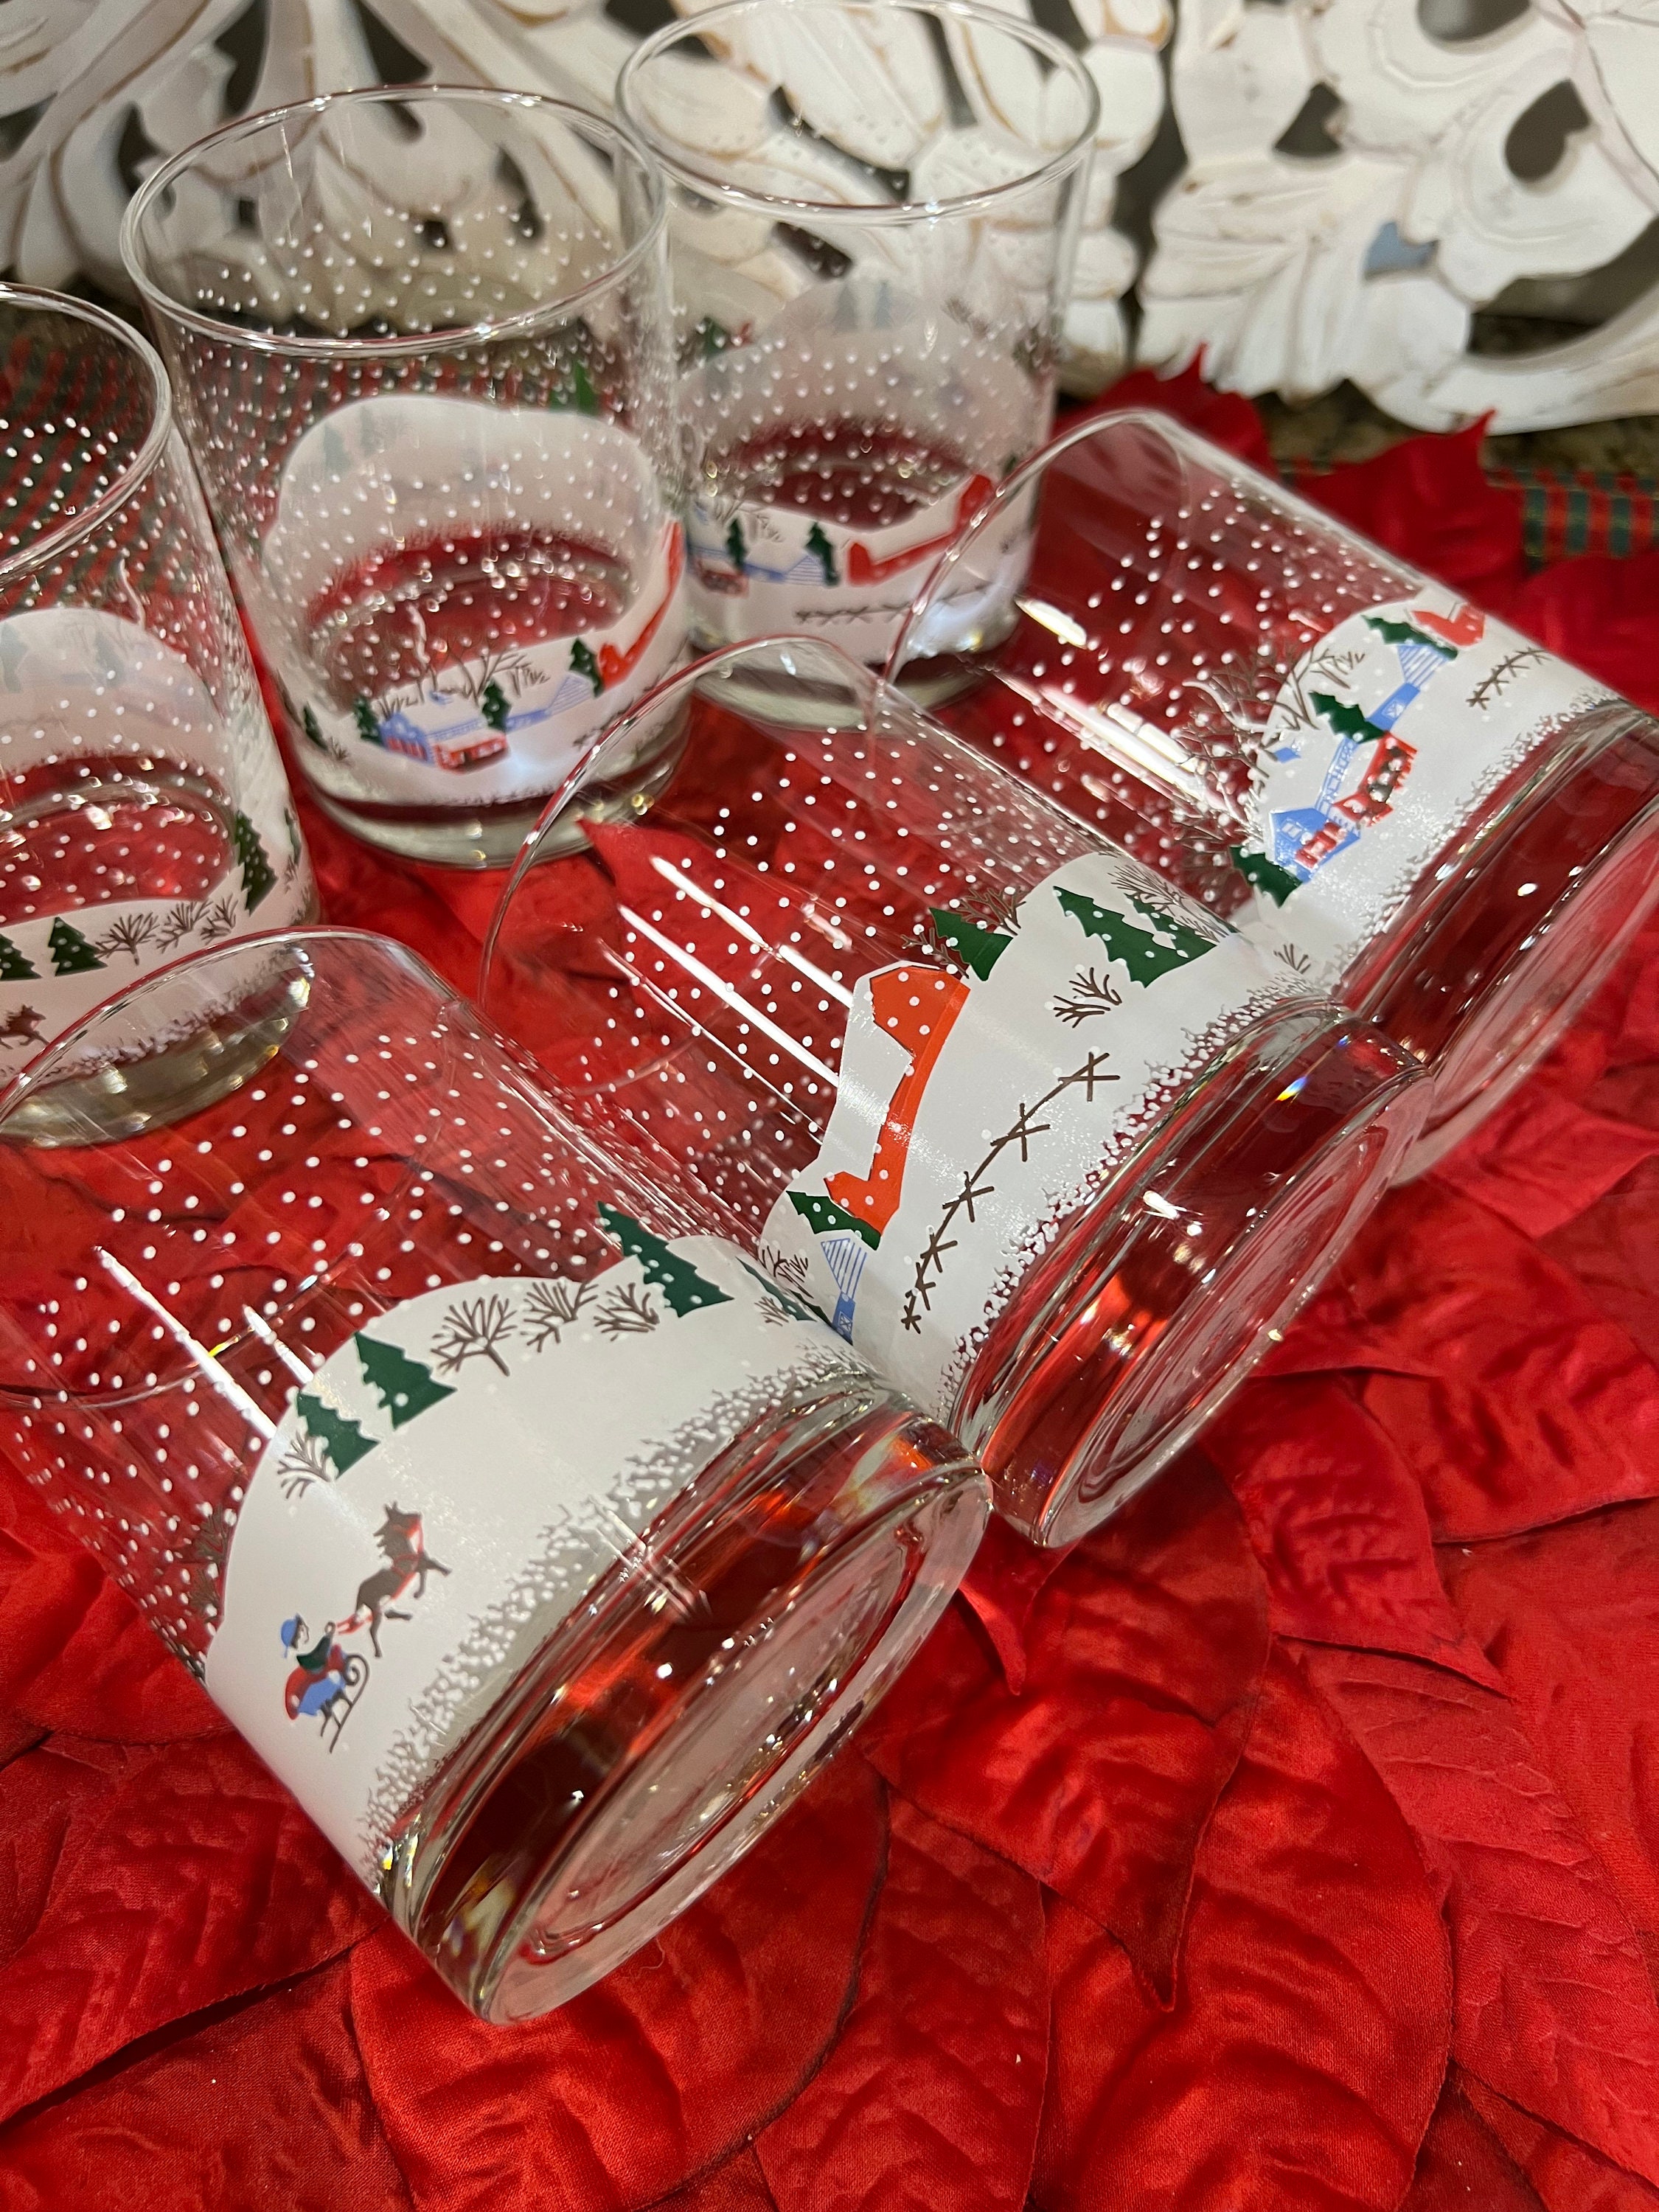 LENOX WINTER CHRISTMAS HOLIDAY STEMLESS WINE GLASSES SET OF 4